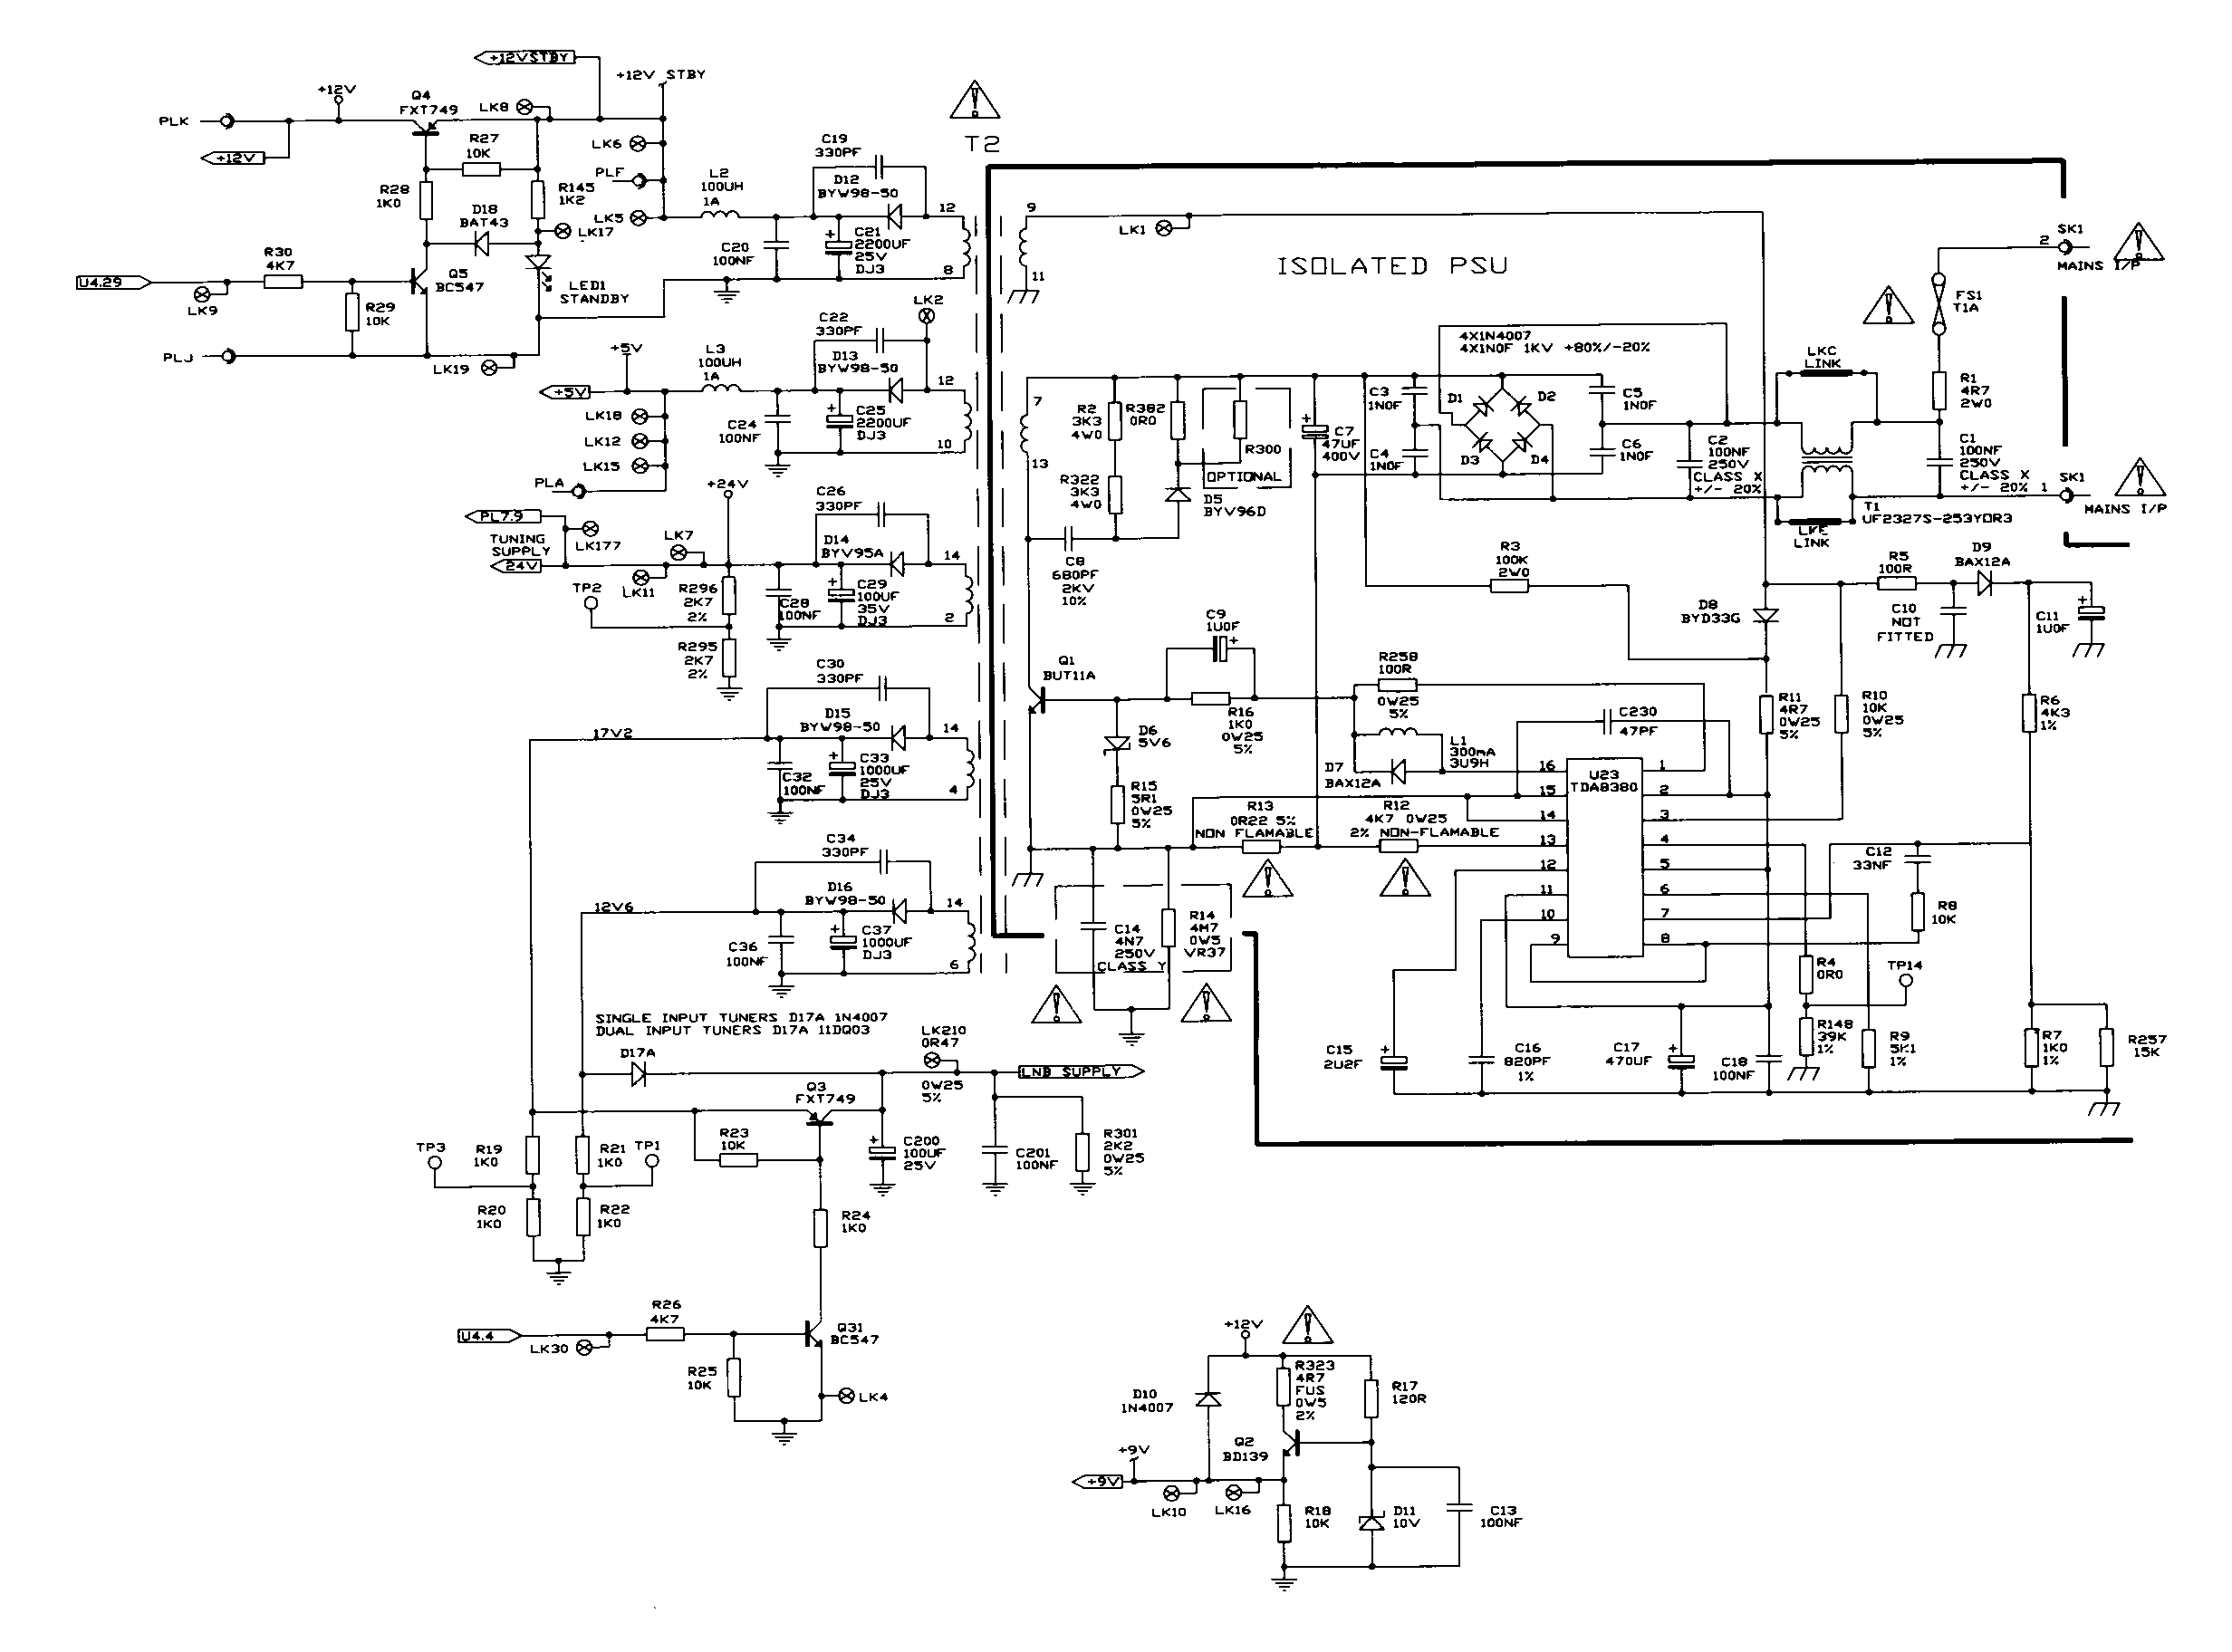 SS9000/9200 PSU circuit diagram.